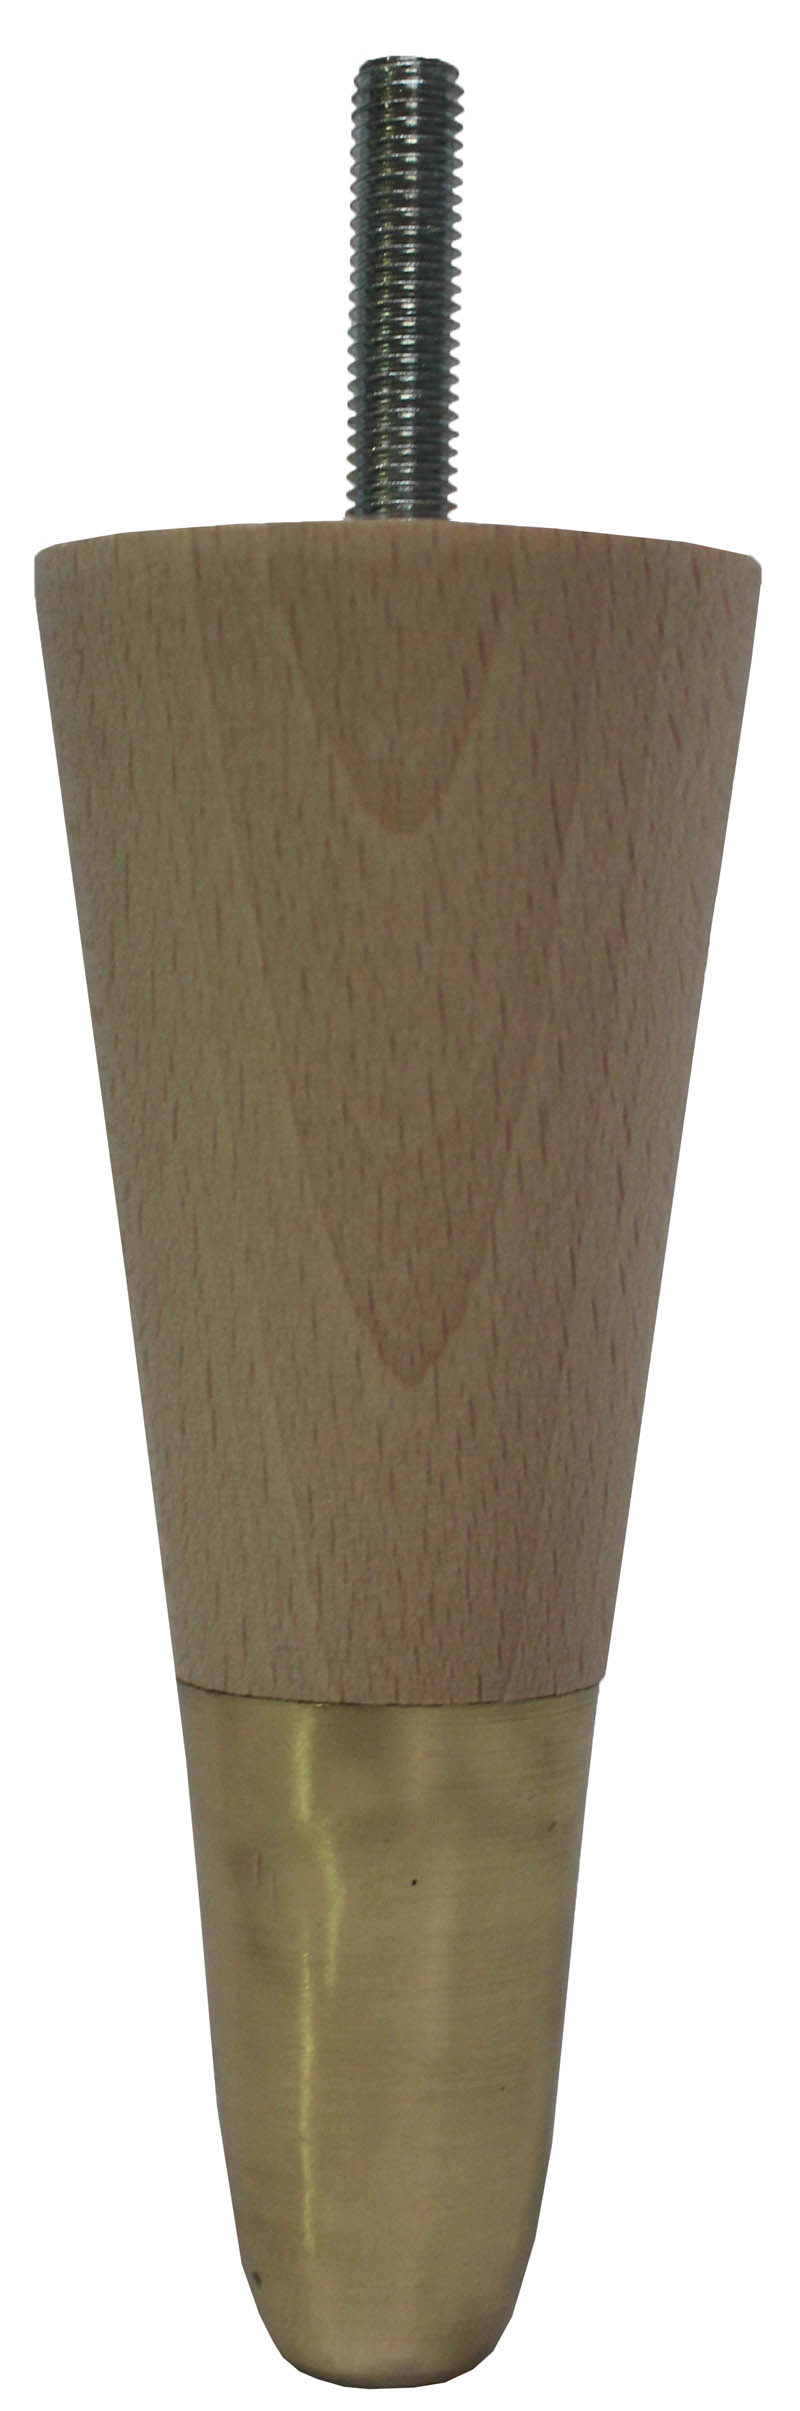 Azalea Tapered Furniture Legs - Raw Finish - Brass Slipper Cups - Set of 4